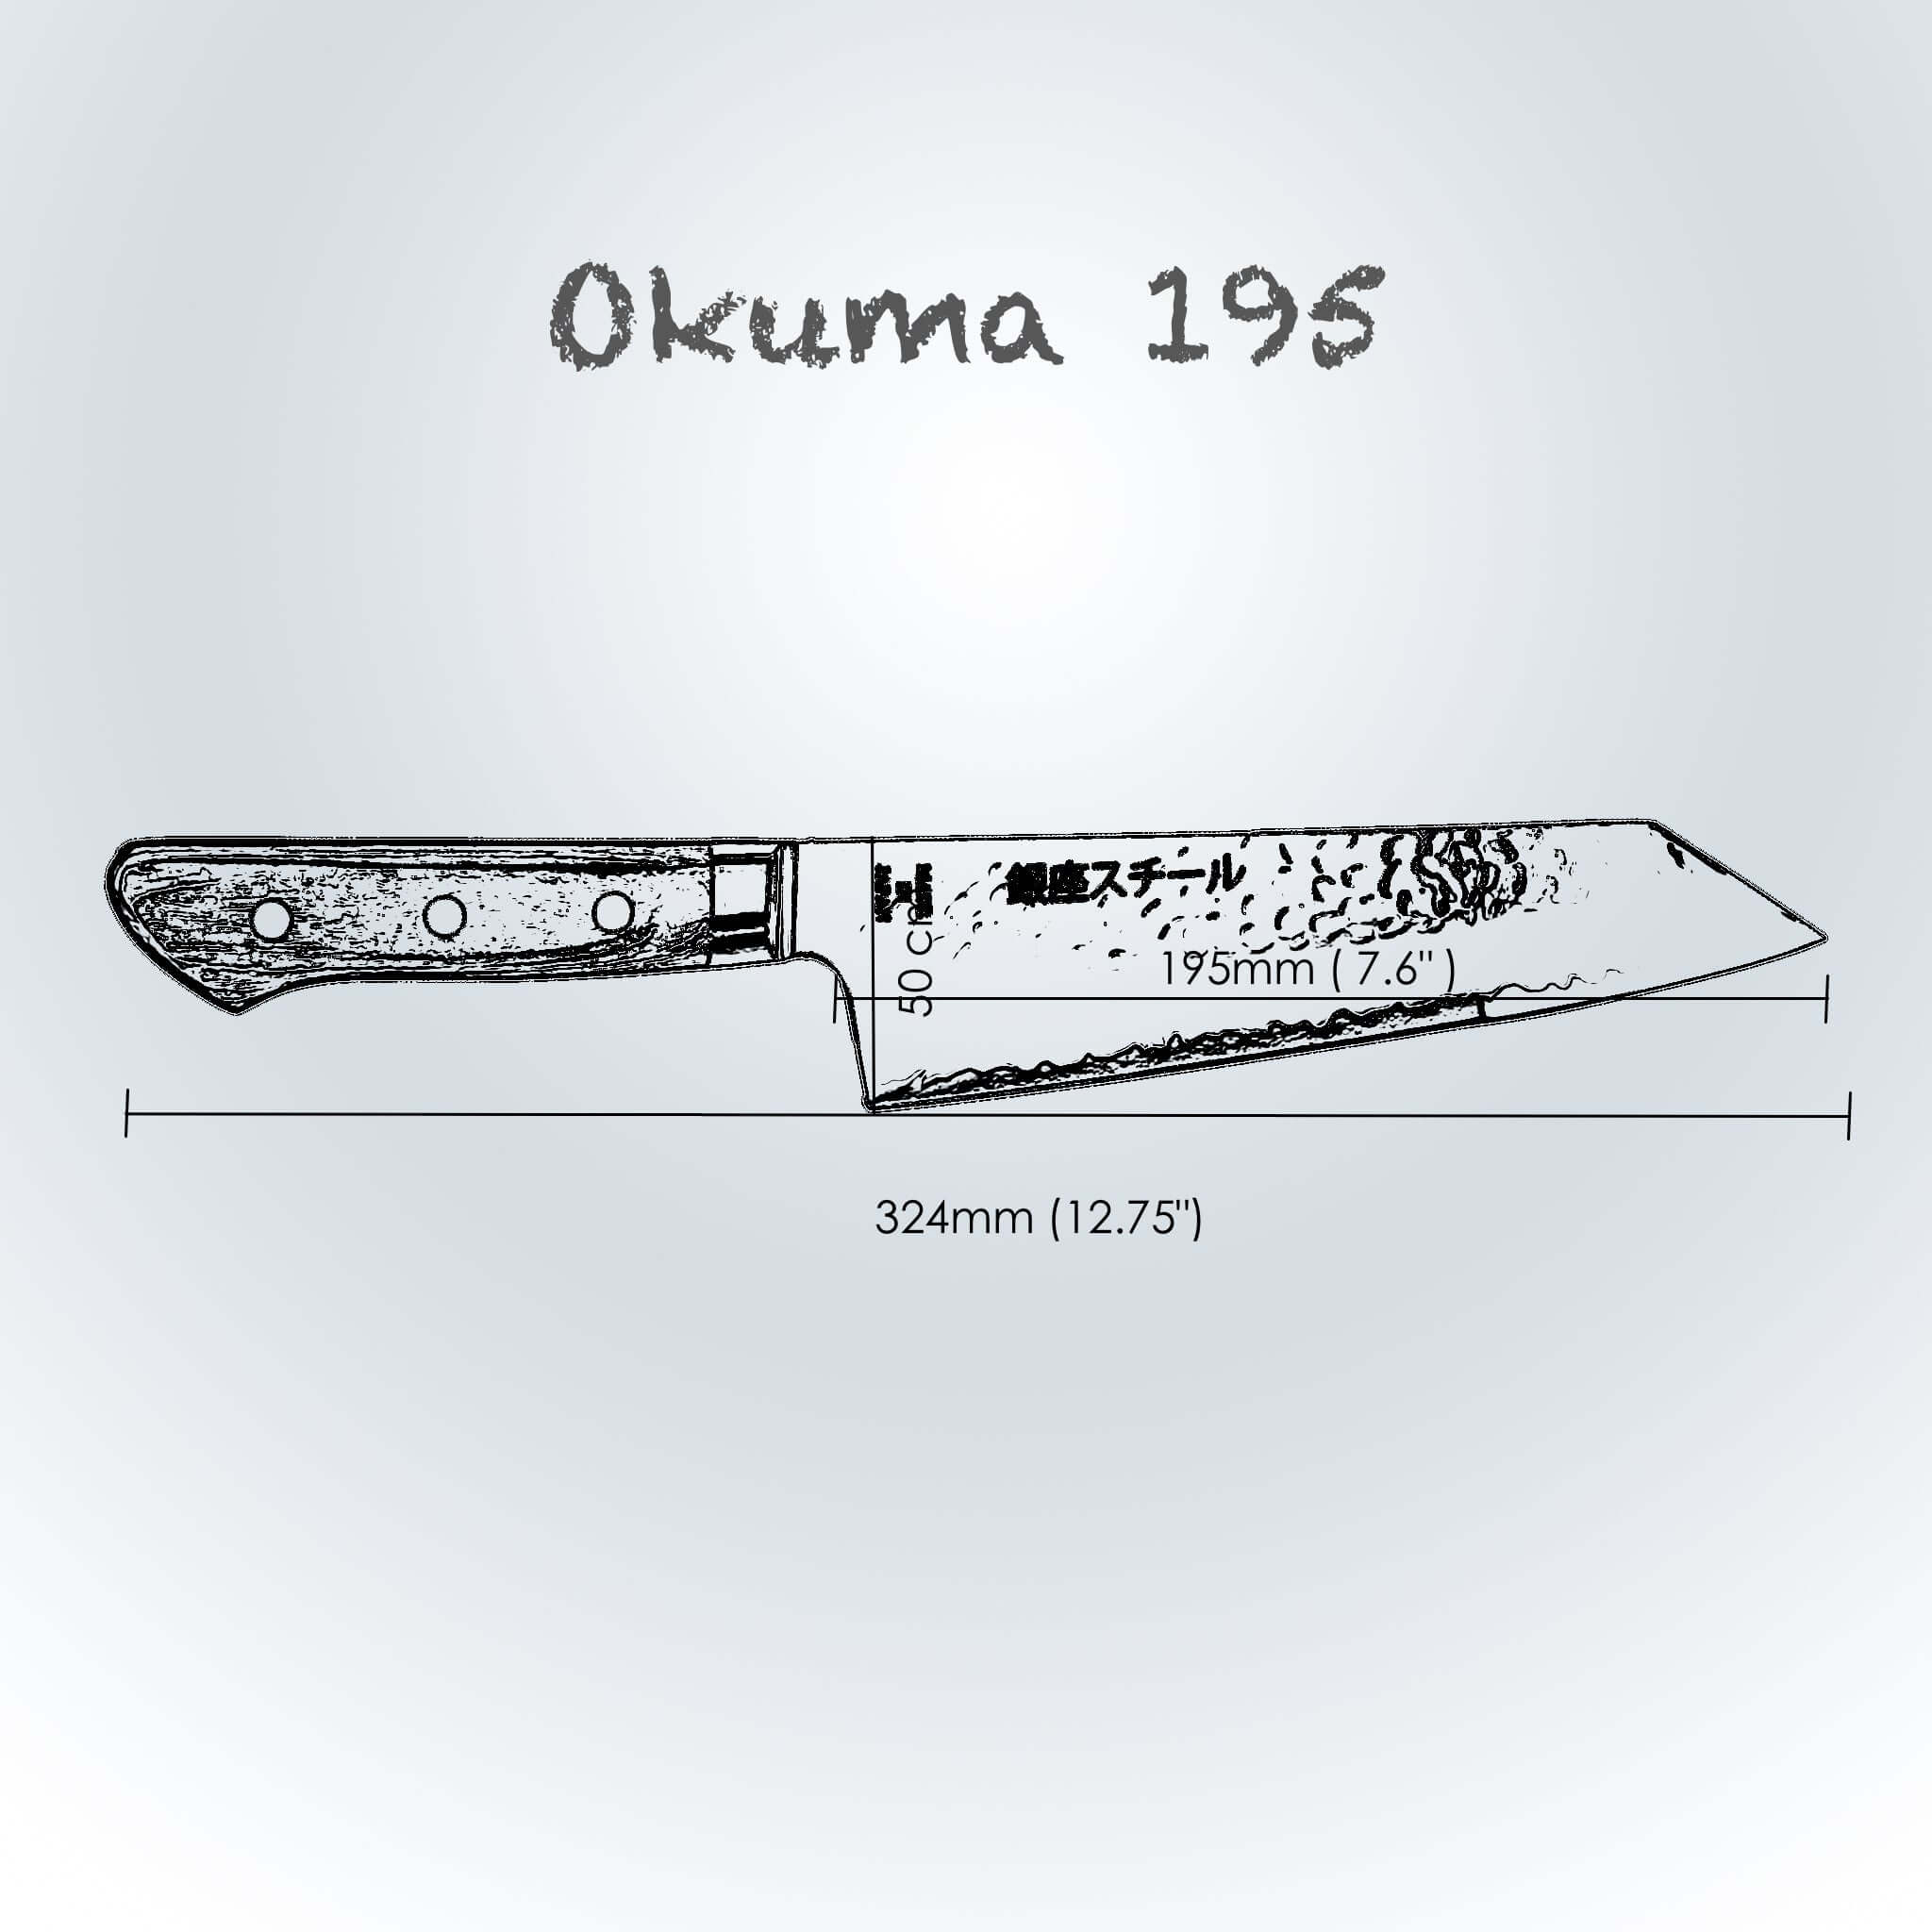 Okuma 195 - Couteau Kiritsuke Santoku 195mm